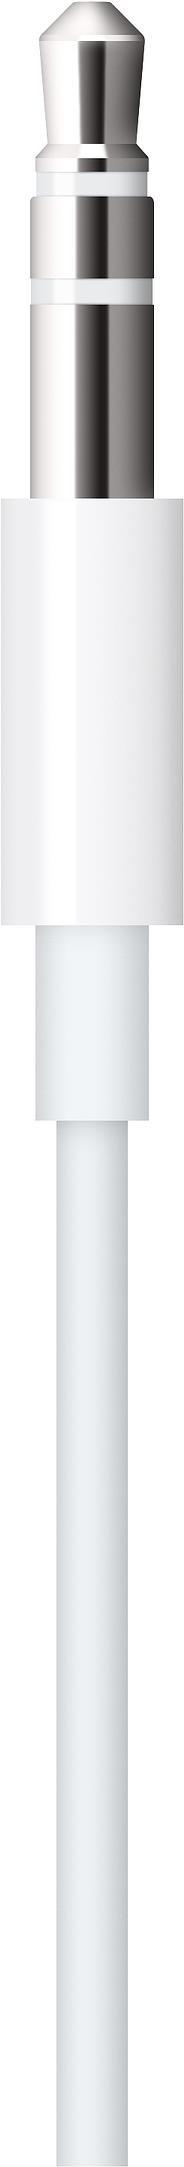 Apple Lightning to 3.5mm Audio Cable - Audiokabel - Lightning (M) bis 4-poliger Mini-Stecker (M) - 1.2 m - weiß - für Apple iPad/iPhone/iPod (Lightning)